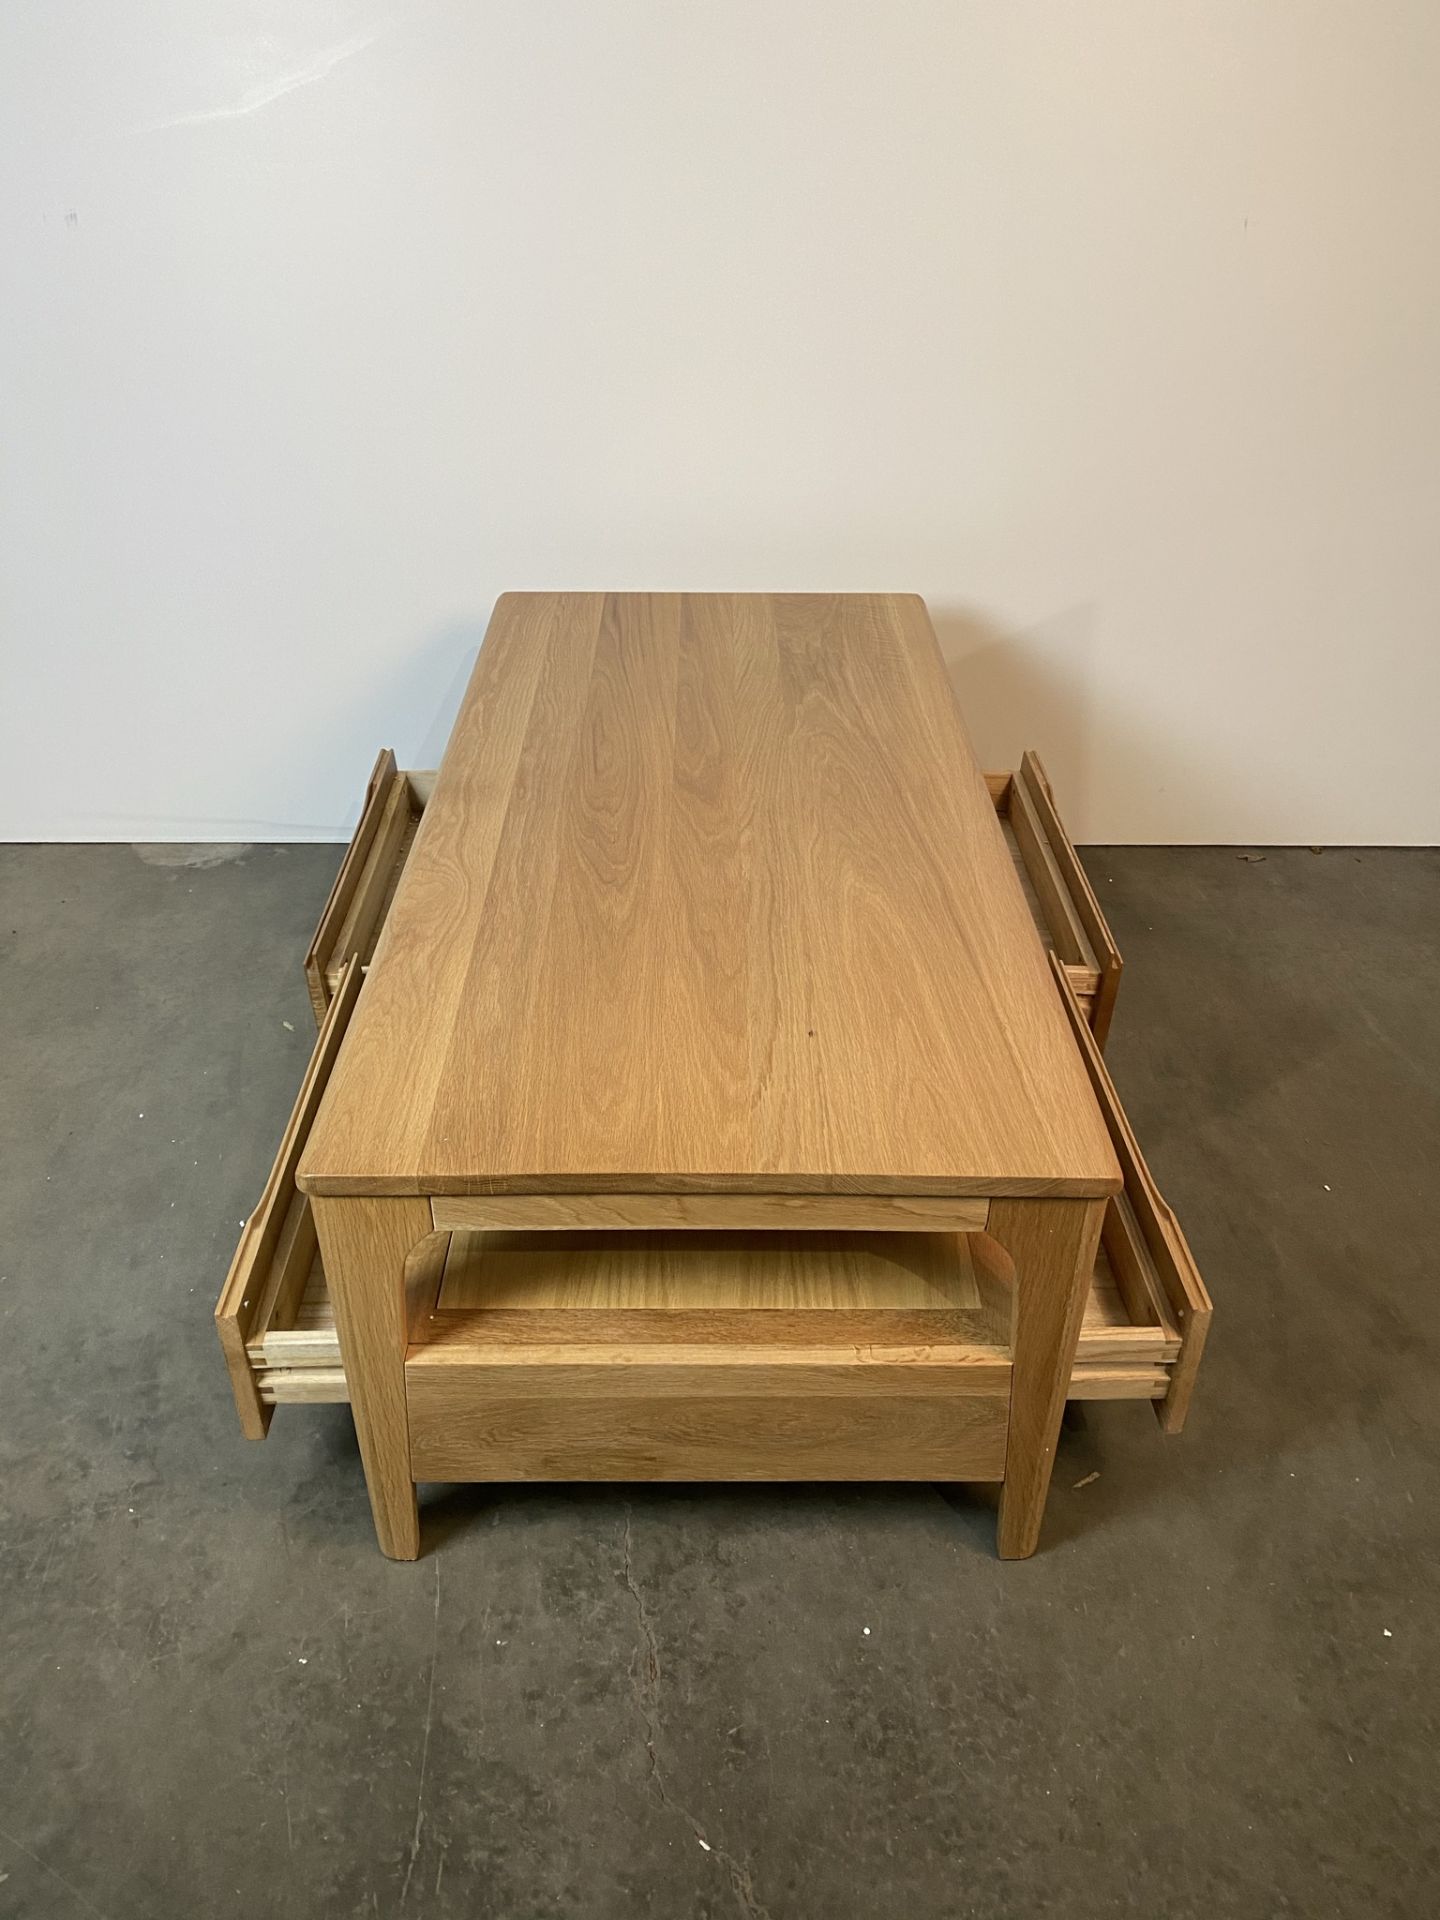 An Solid Oak + Phoenix 4 drawer coffee table - 120cm x 60cm x 45 cm - Image 7 of 10